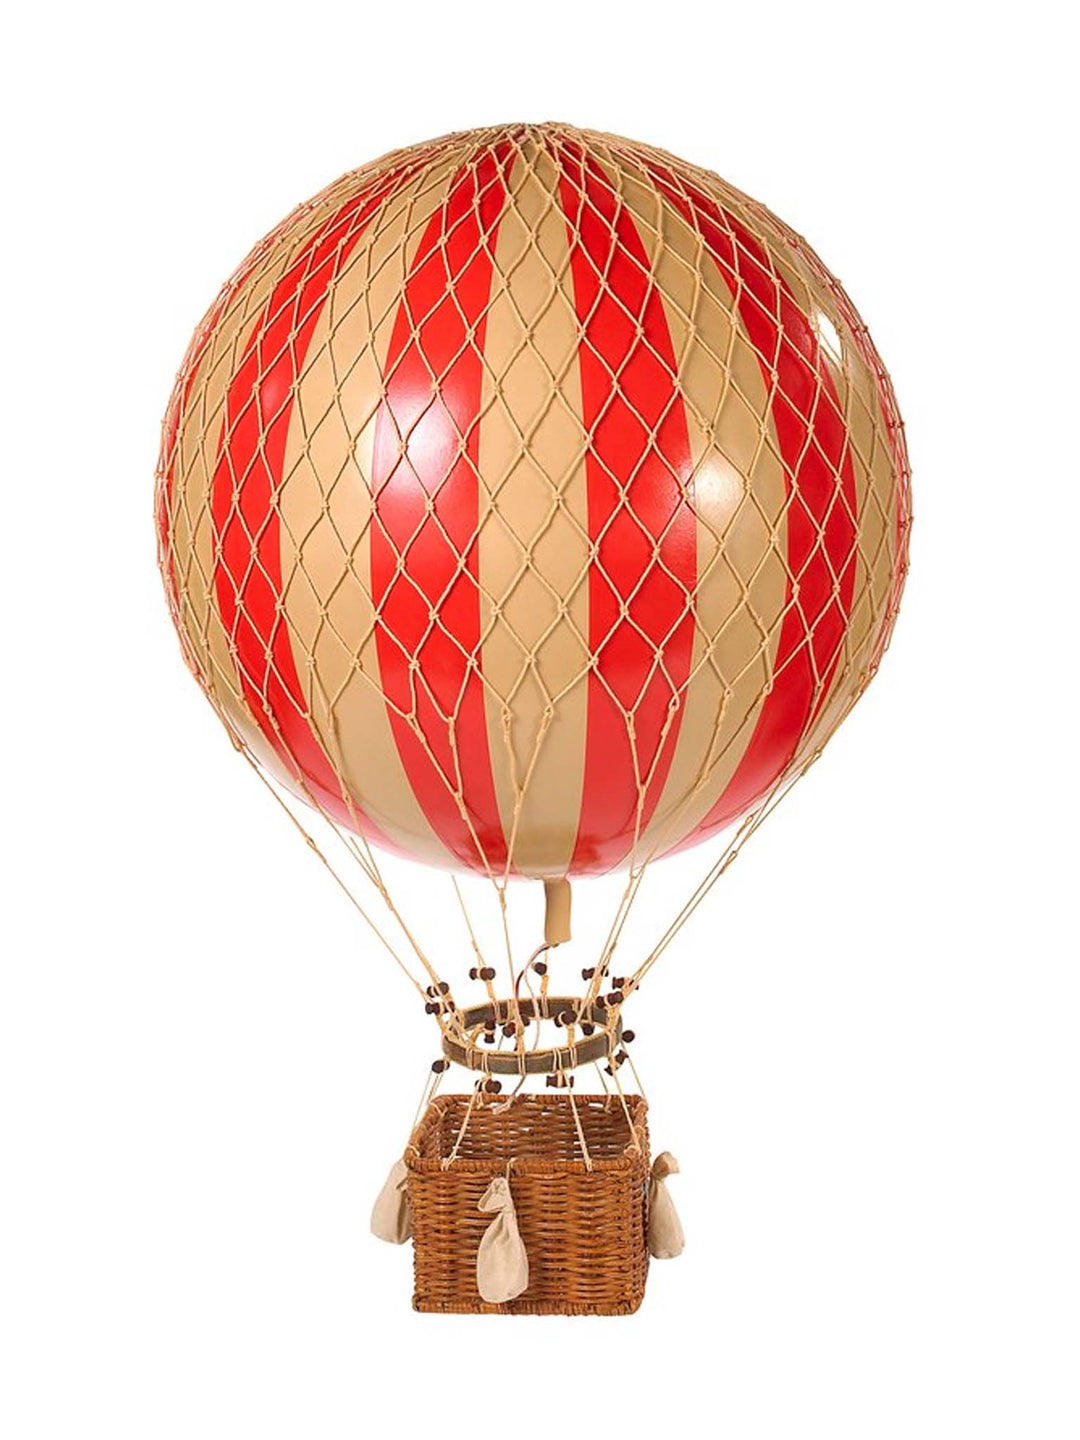 red balloon, red hot air balloon replica model, 